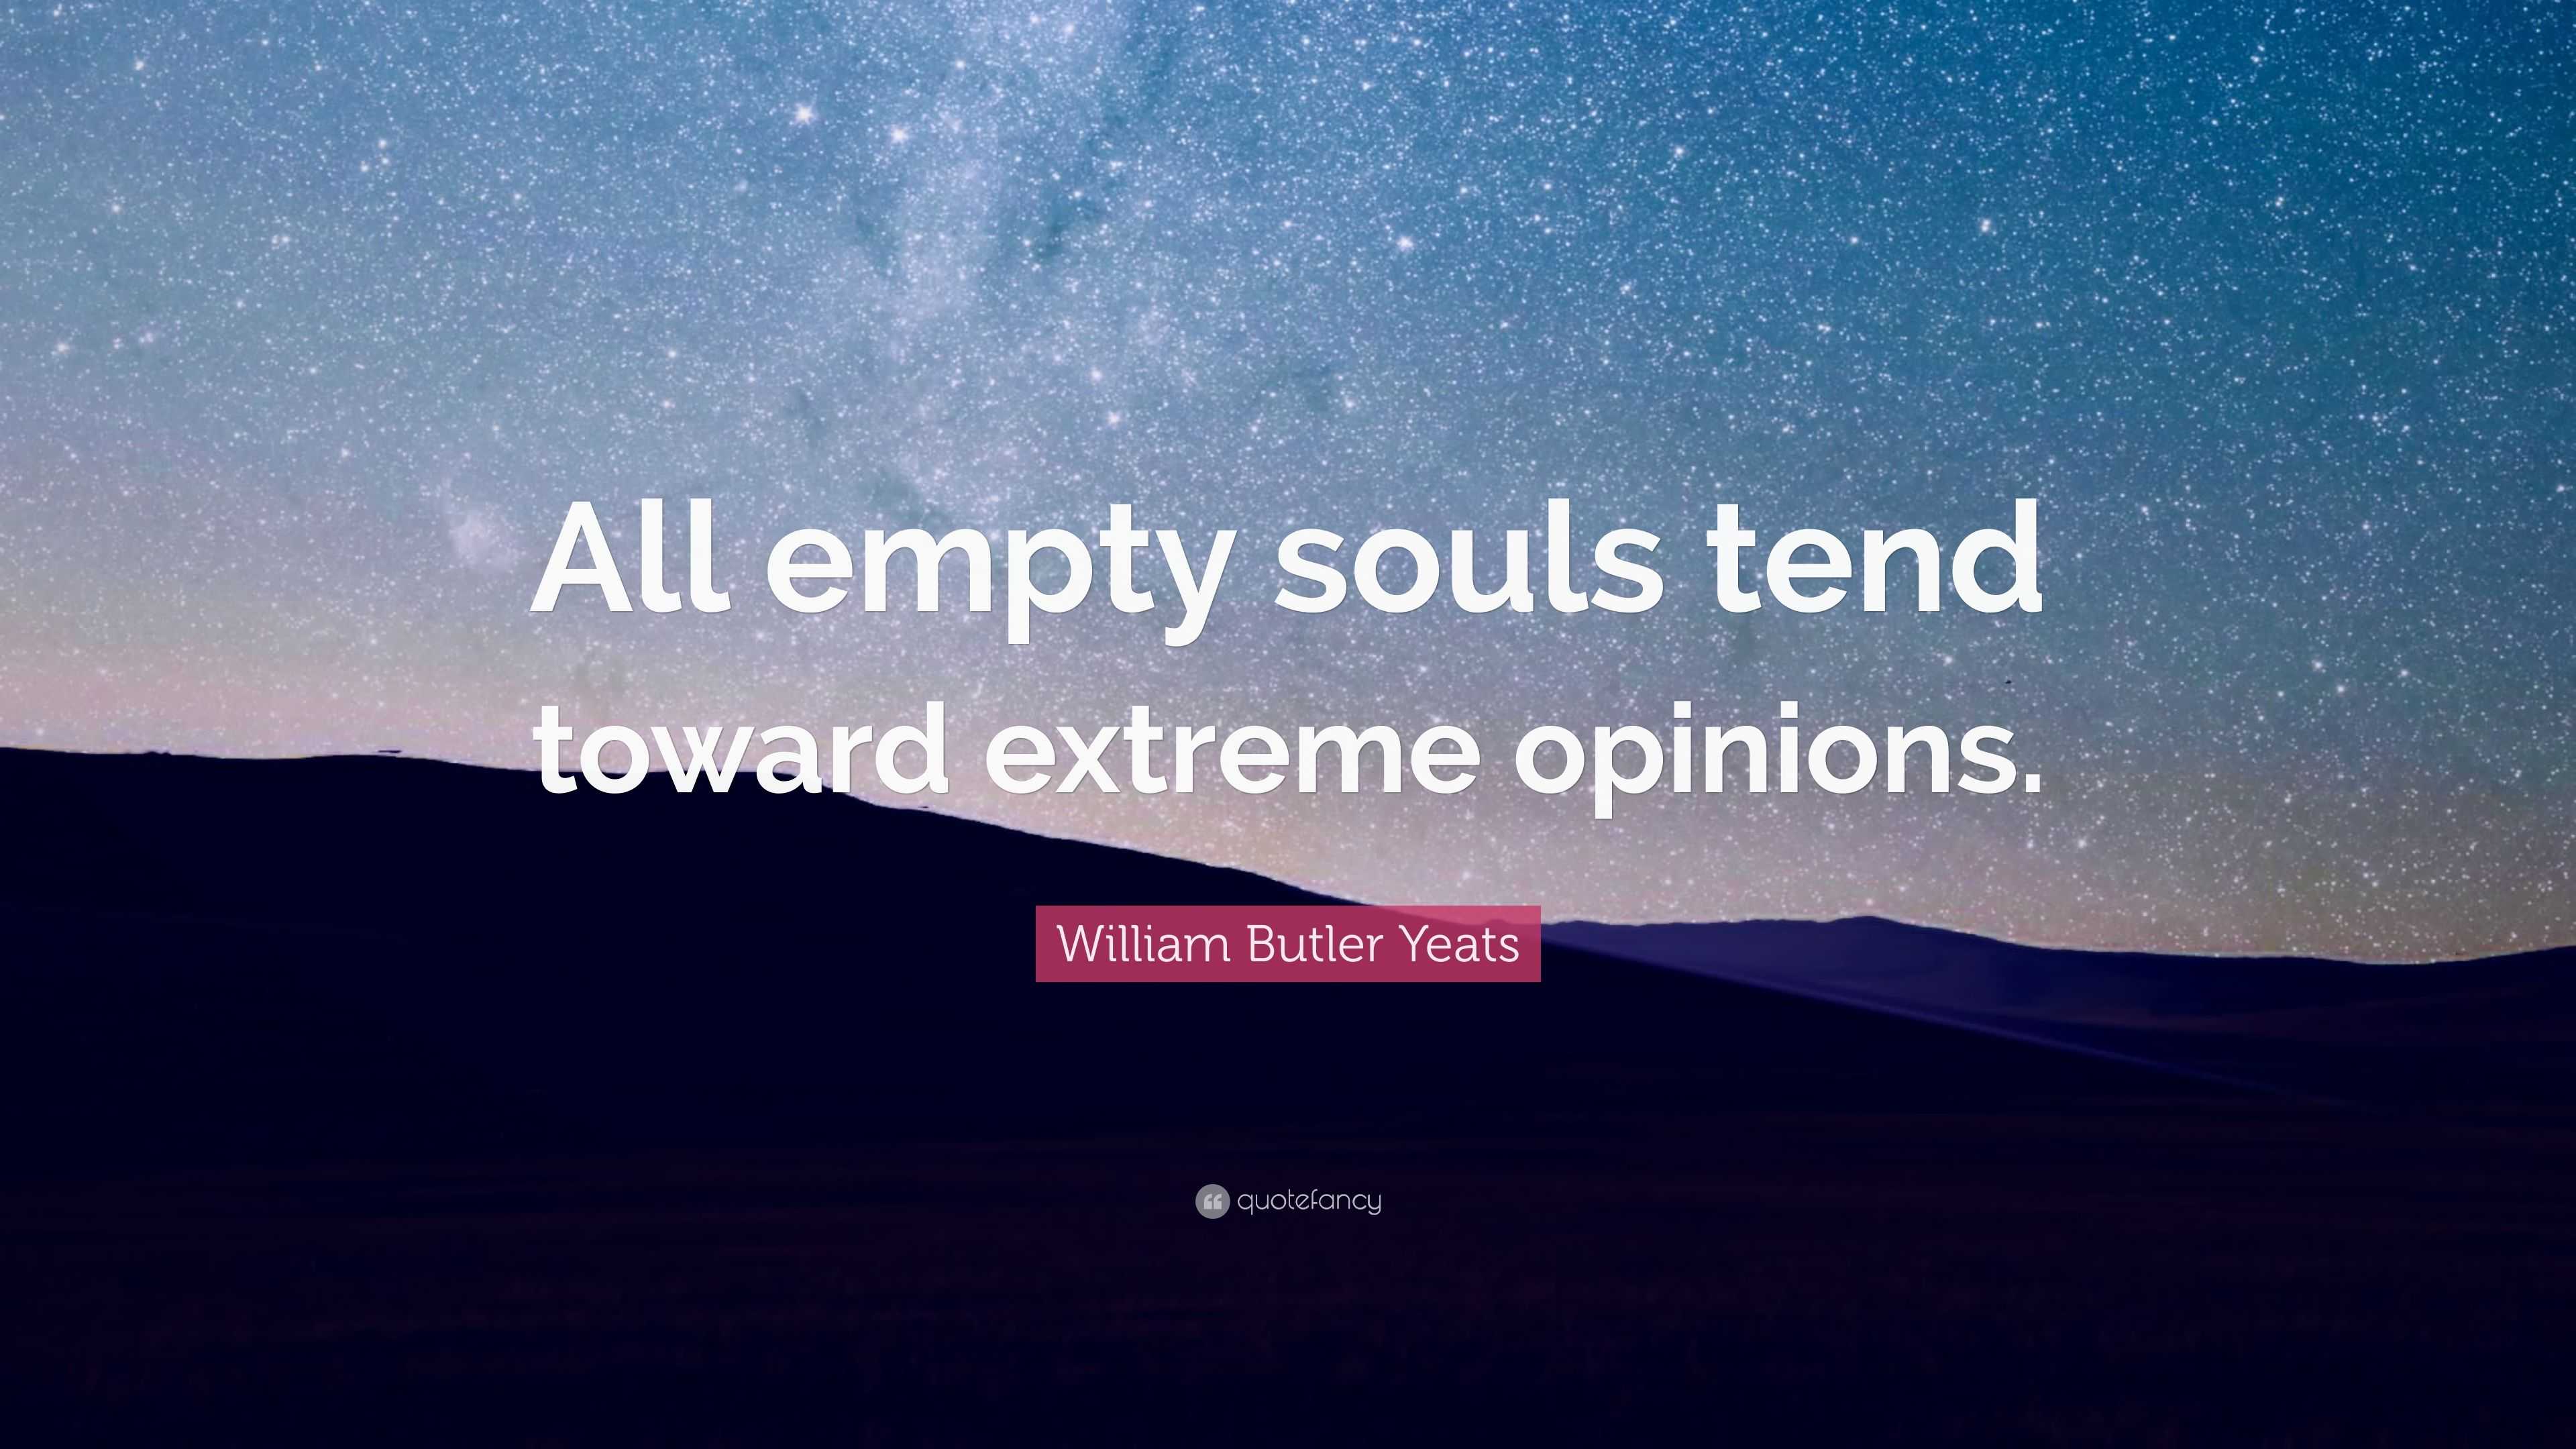 empty soul quotes